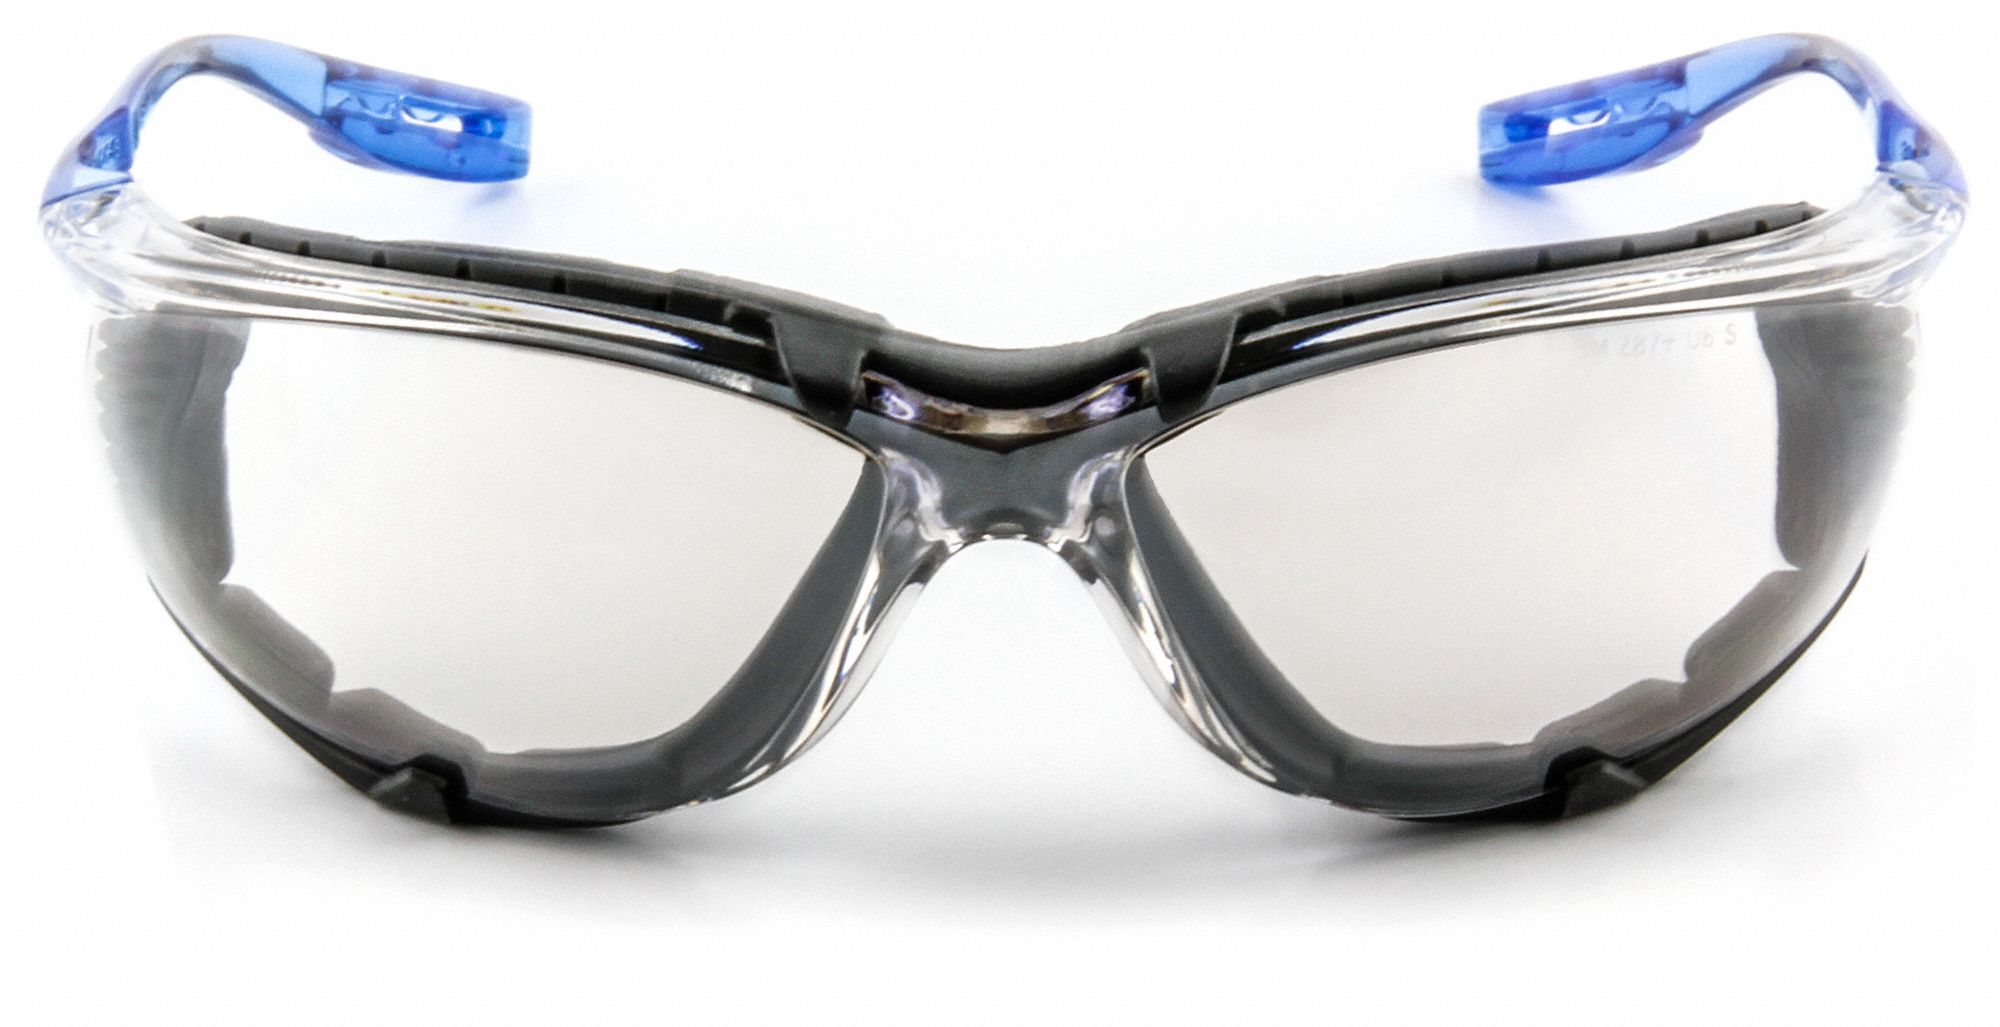 3m Virtua™ Ccs Anti Fog Safety Glasses Indoor Outdoor Mirror Lens